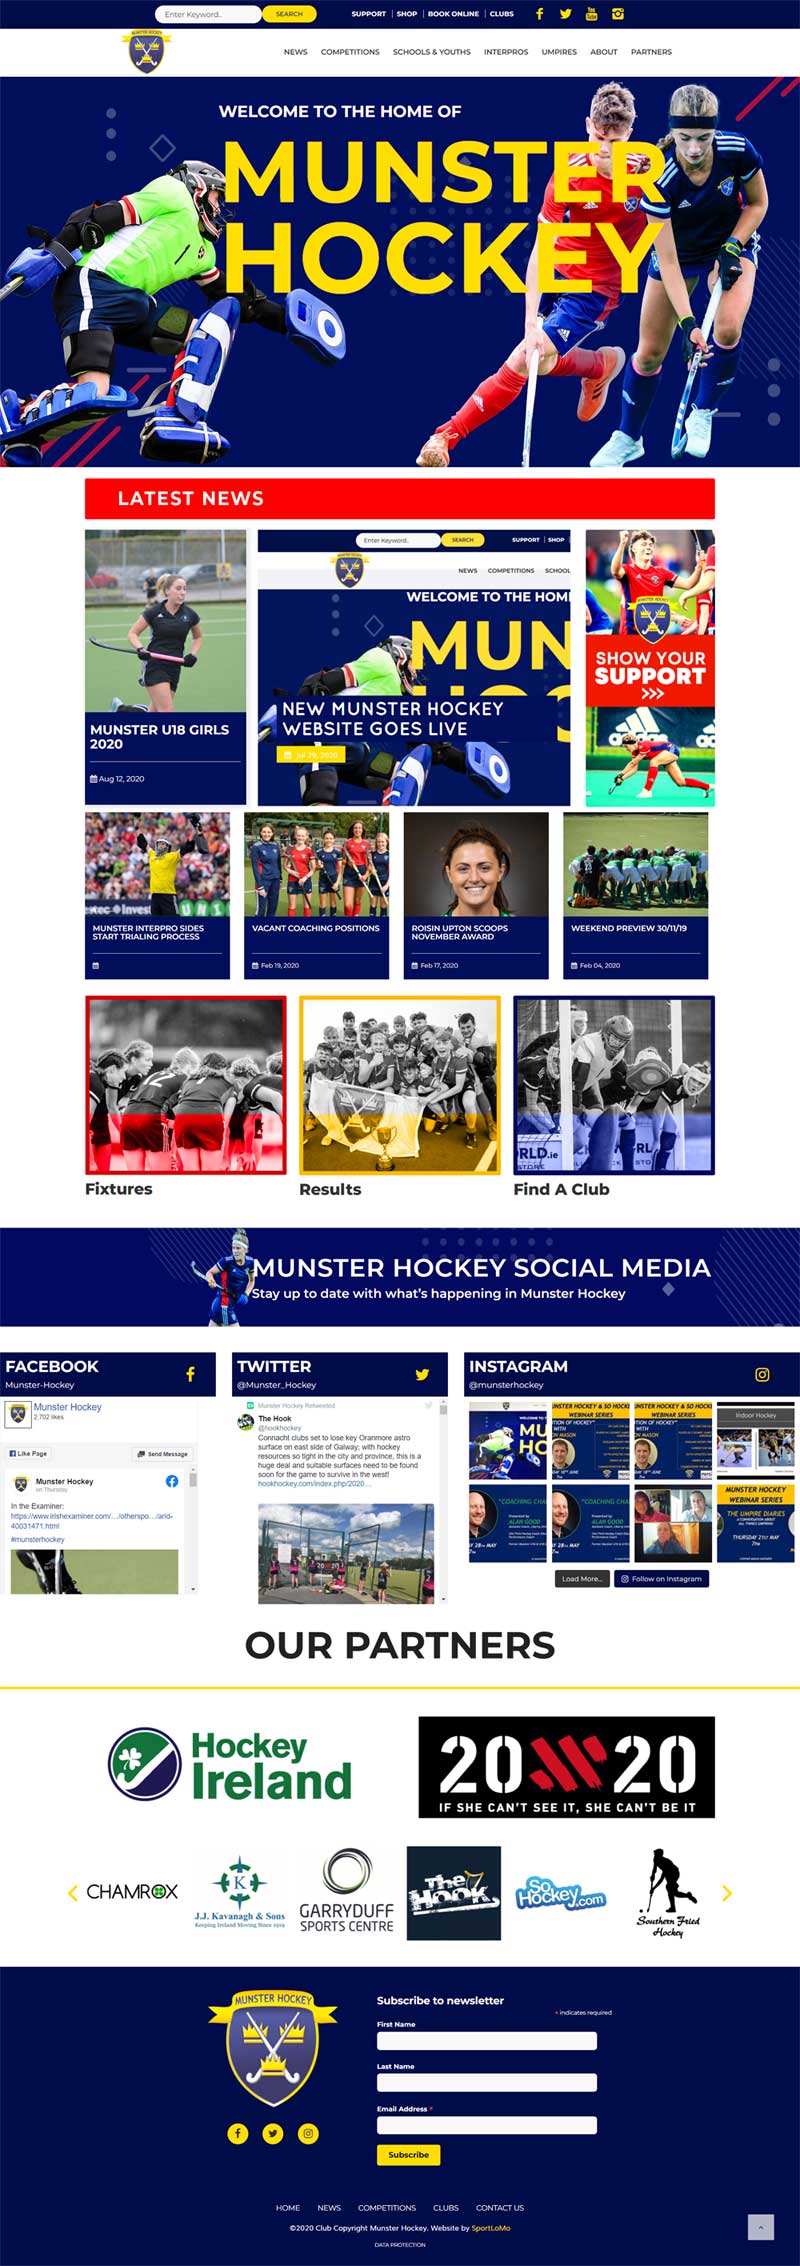 Munsterhockey.ie just lauched August 2020